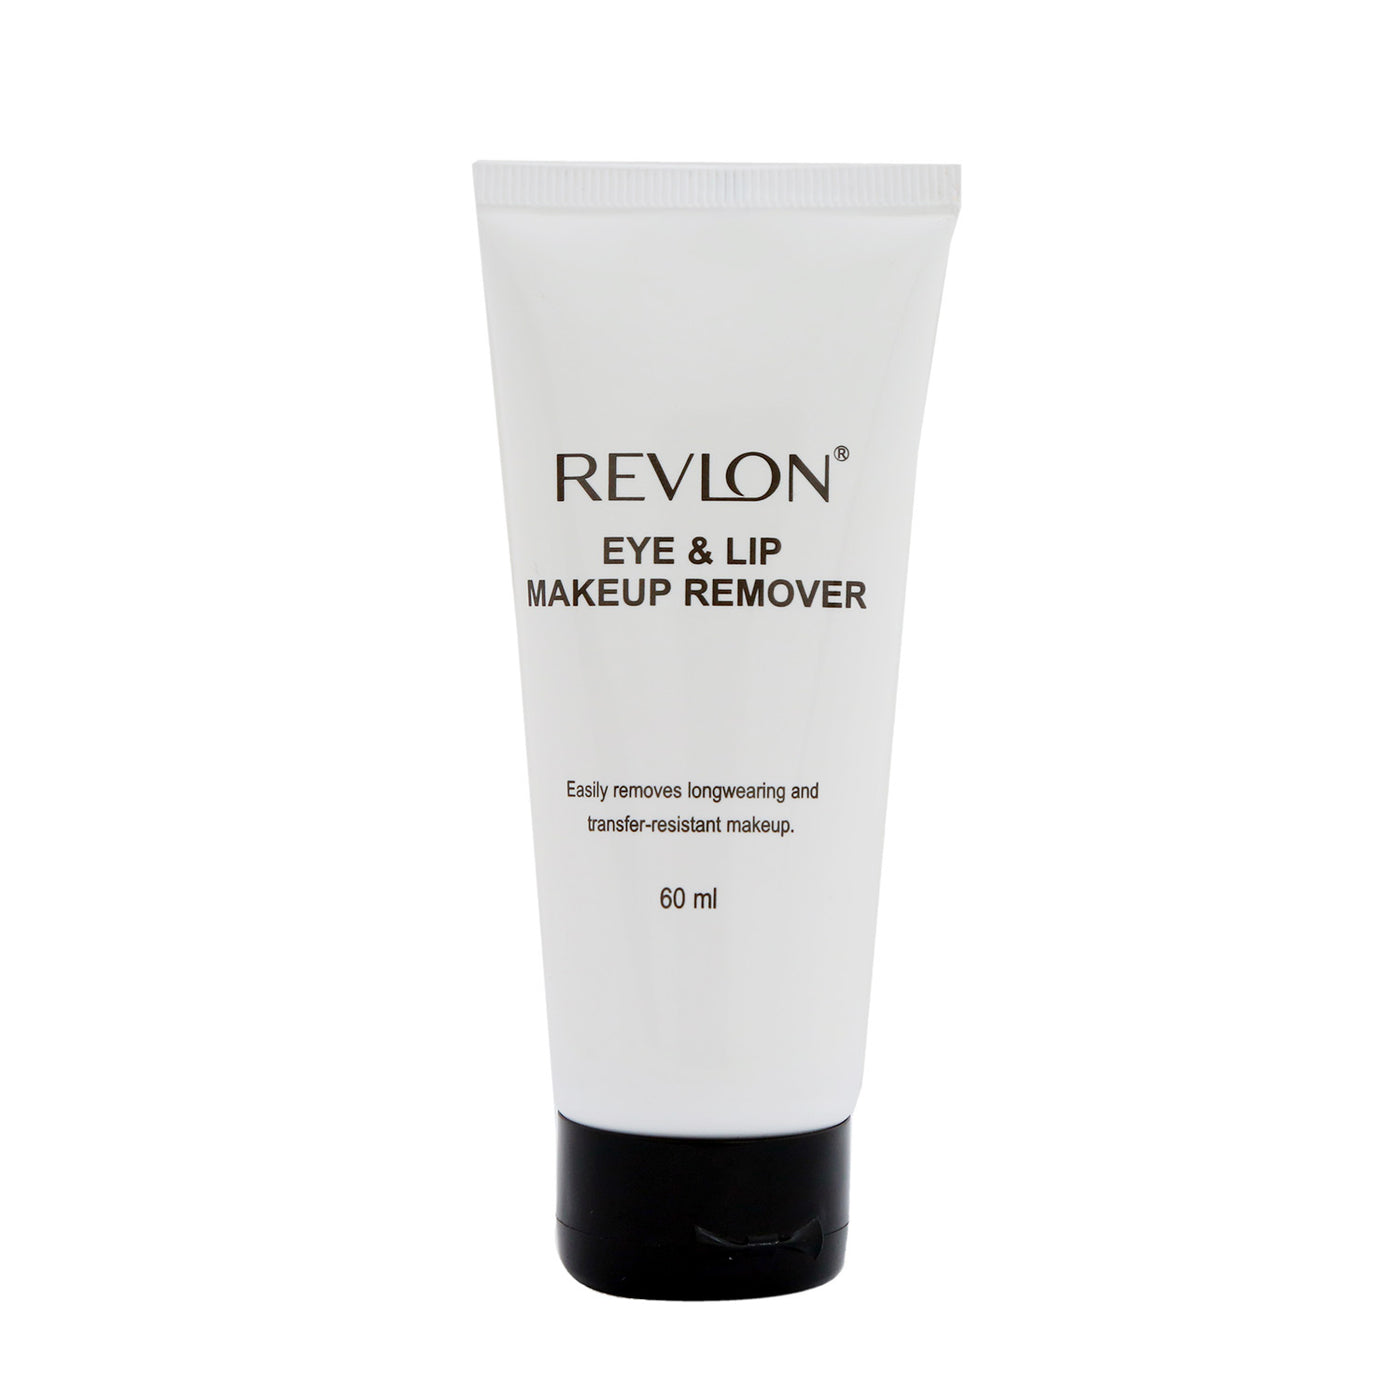 Revlon Eye and Lip Makeup Remover